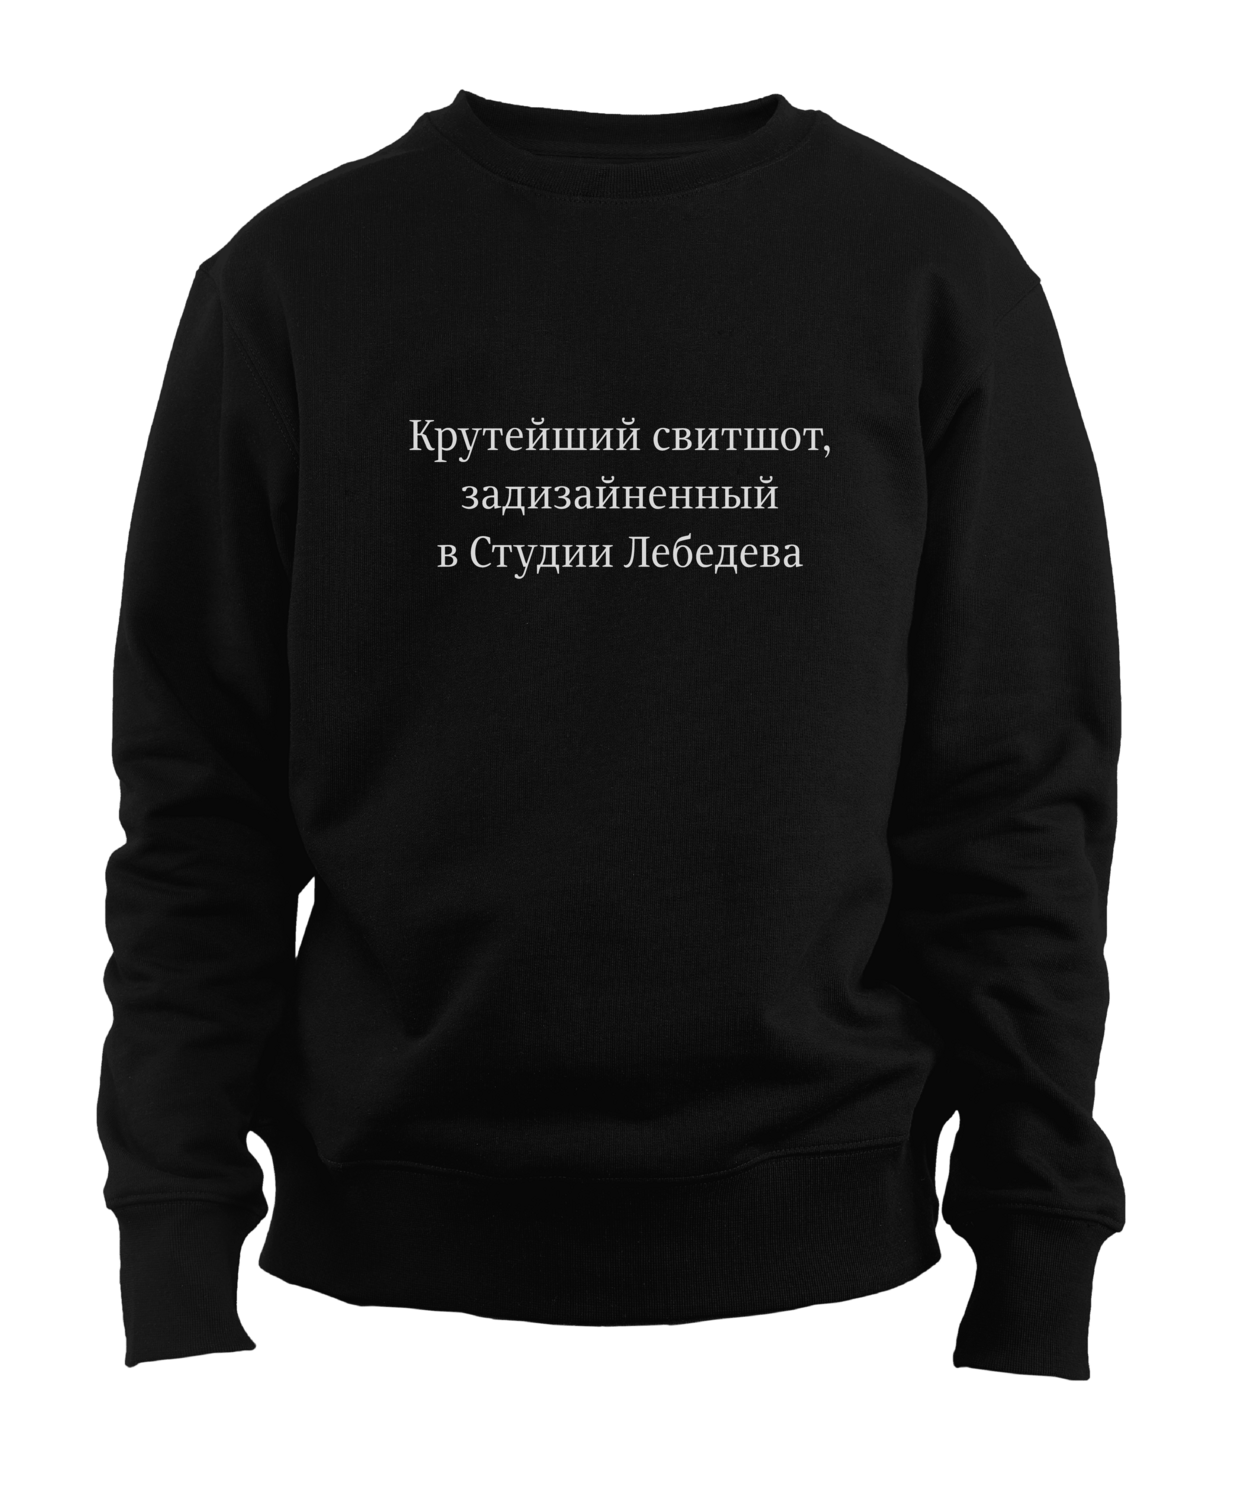 Surely the coolest sweatshirt ever designed by Art. Lebedev Studio